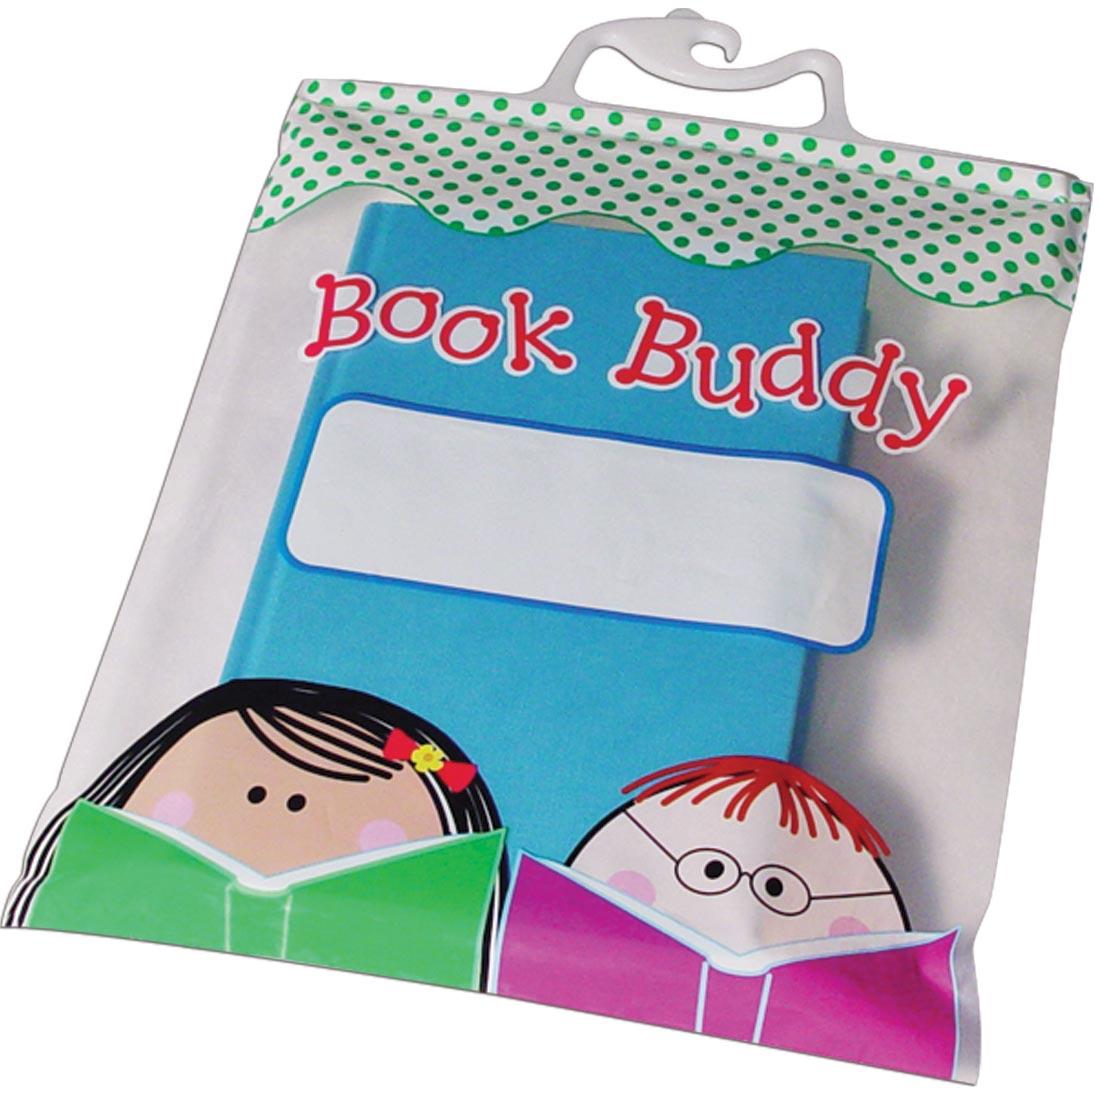 Book Buddy Bag by Creative Teaching Press holding a blue book